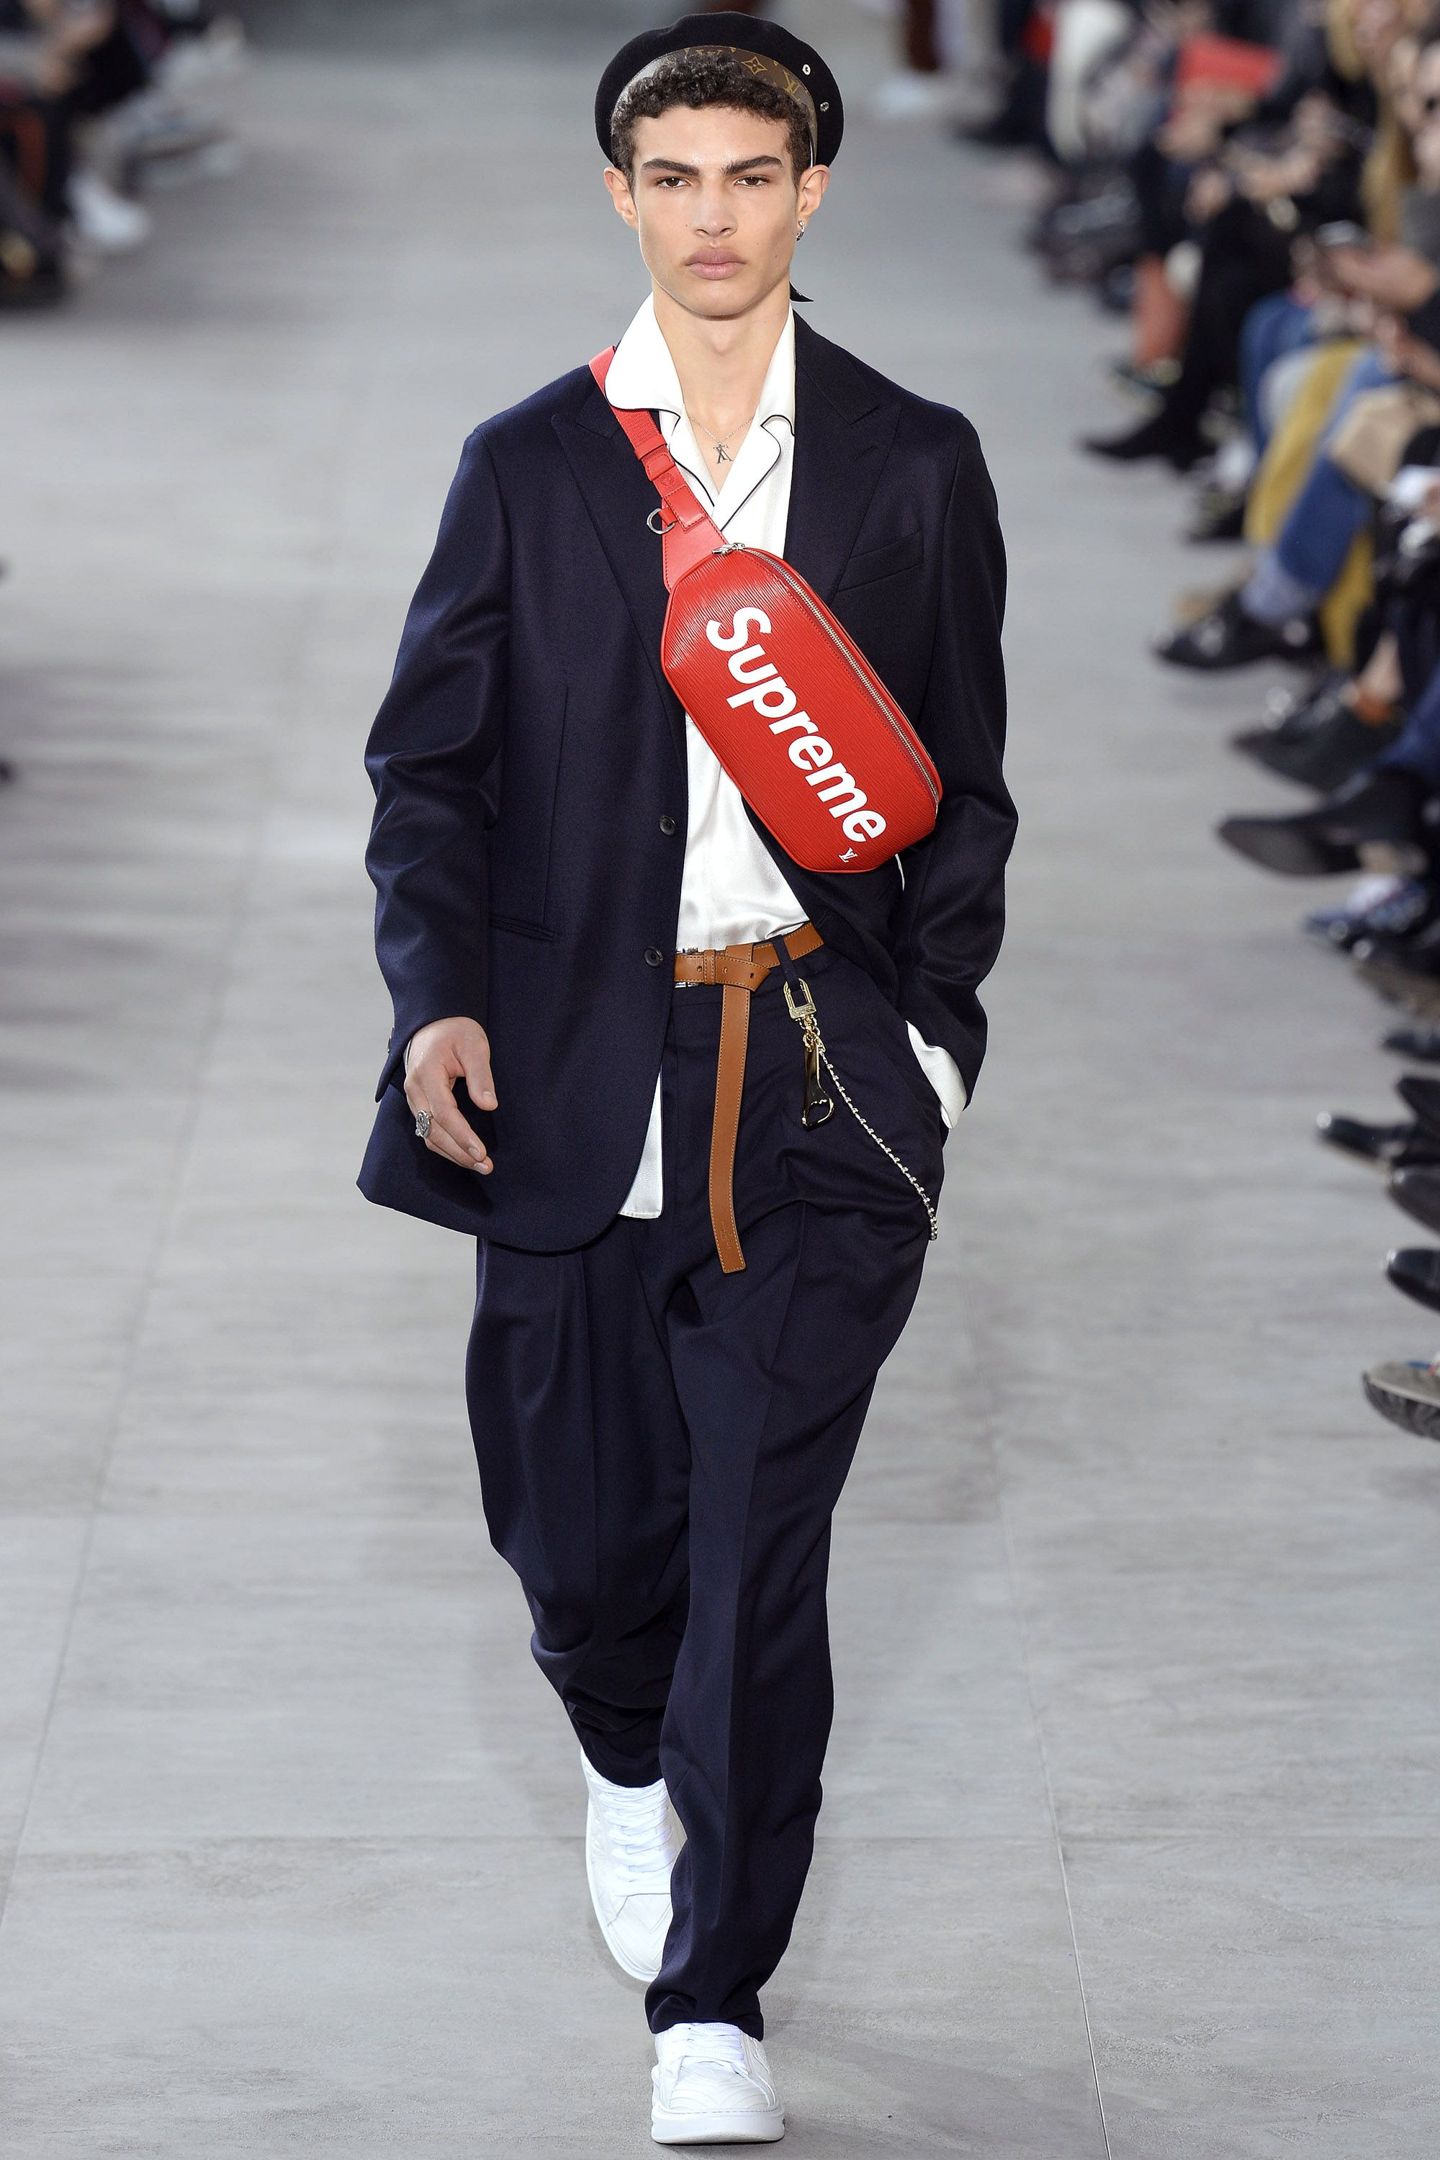 Louis Vuitton and Supreme team up for Paris fashion week